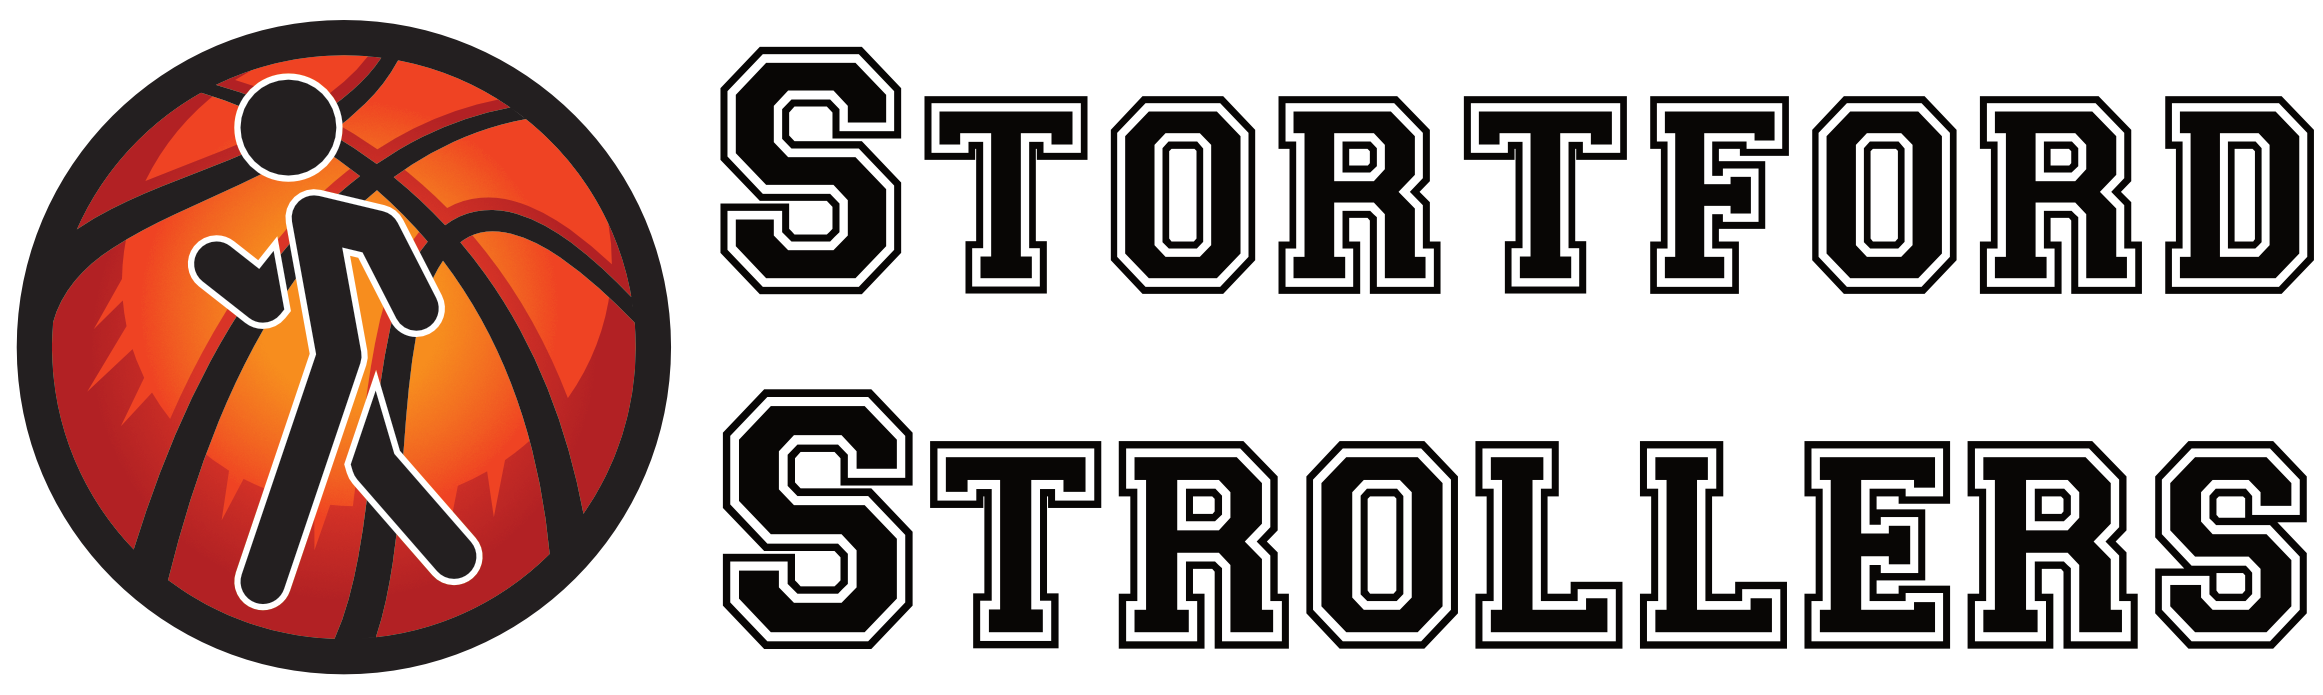 Stortford Strollers logo